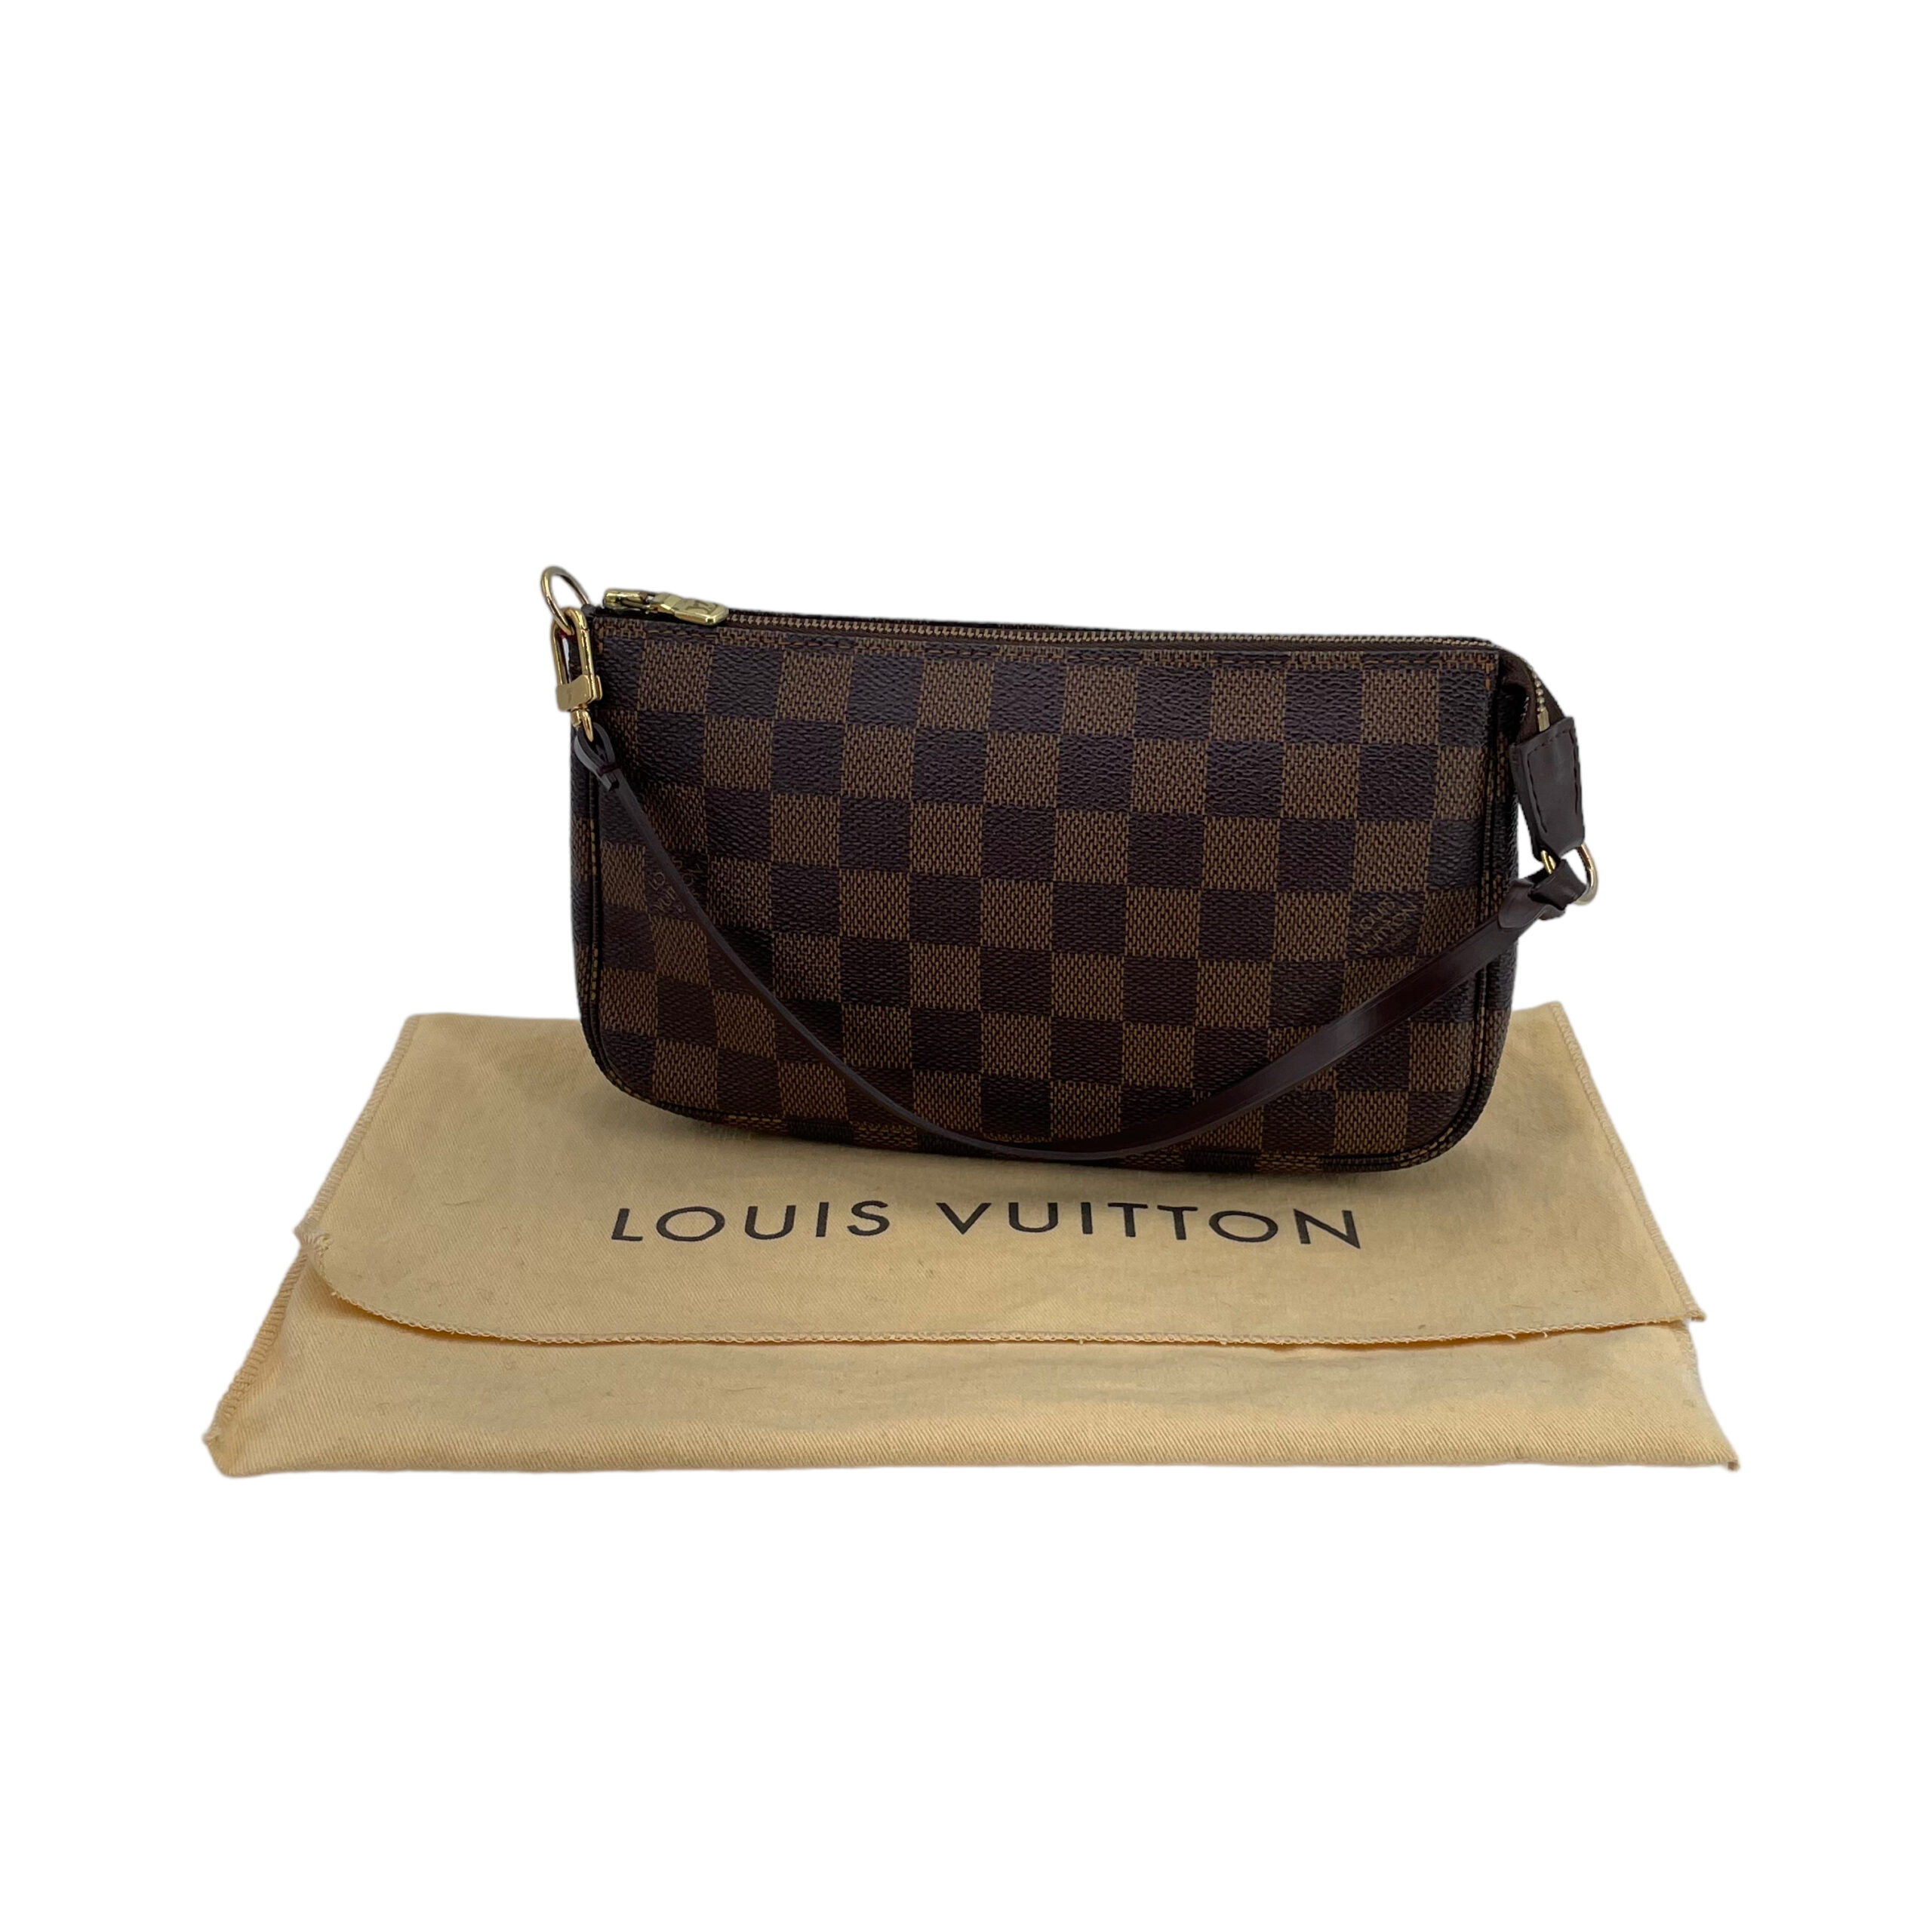 How to Clean Louis Vuitton Pochette Accessories 